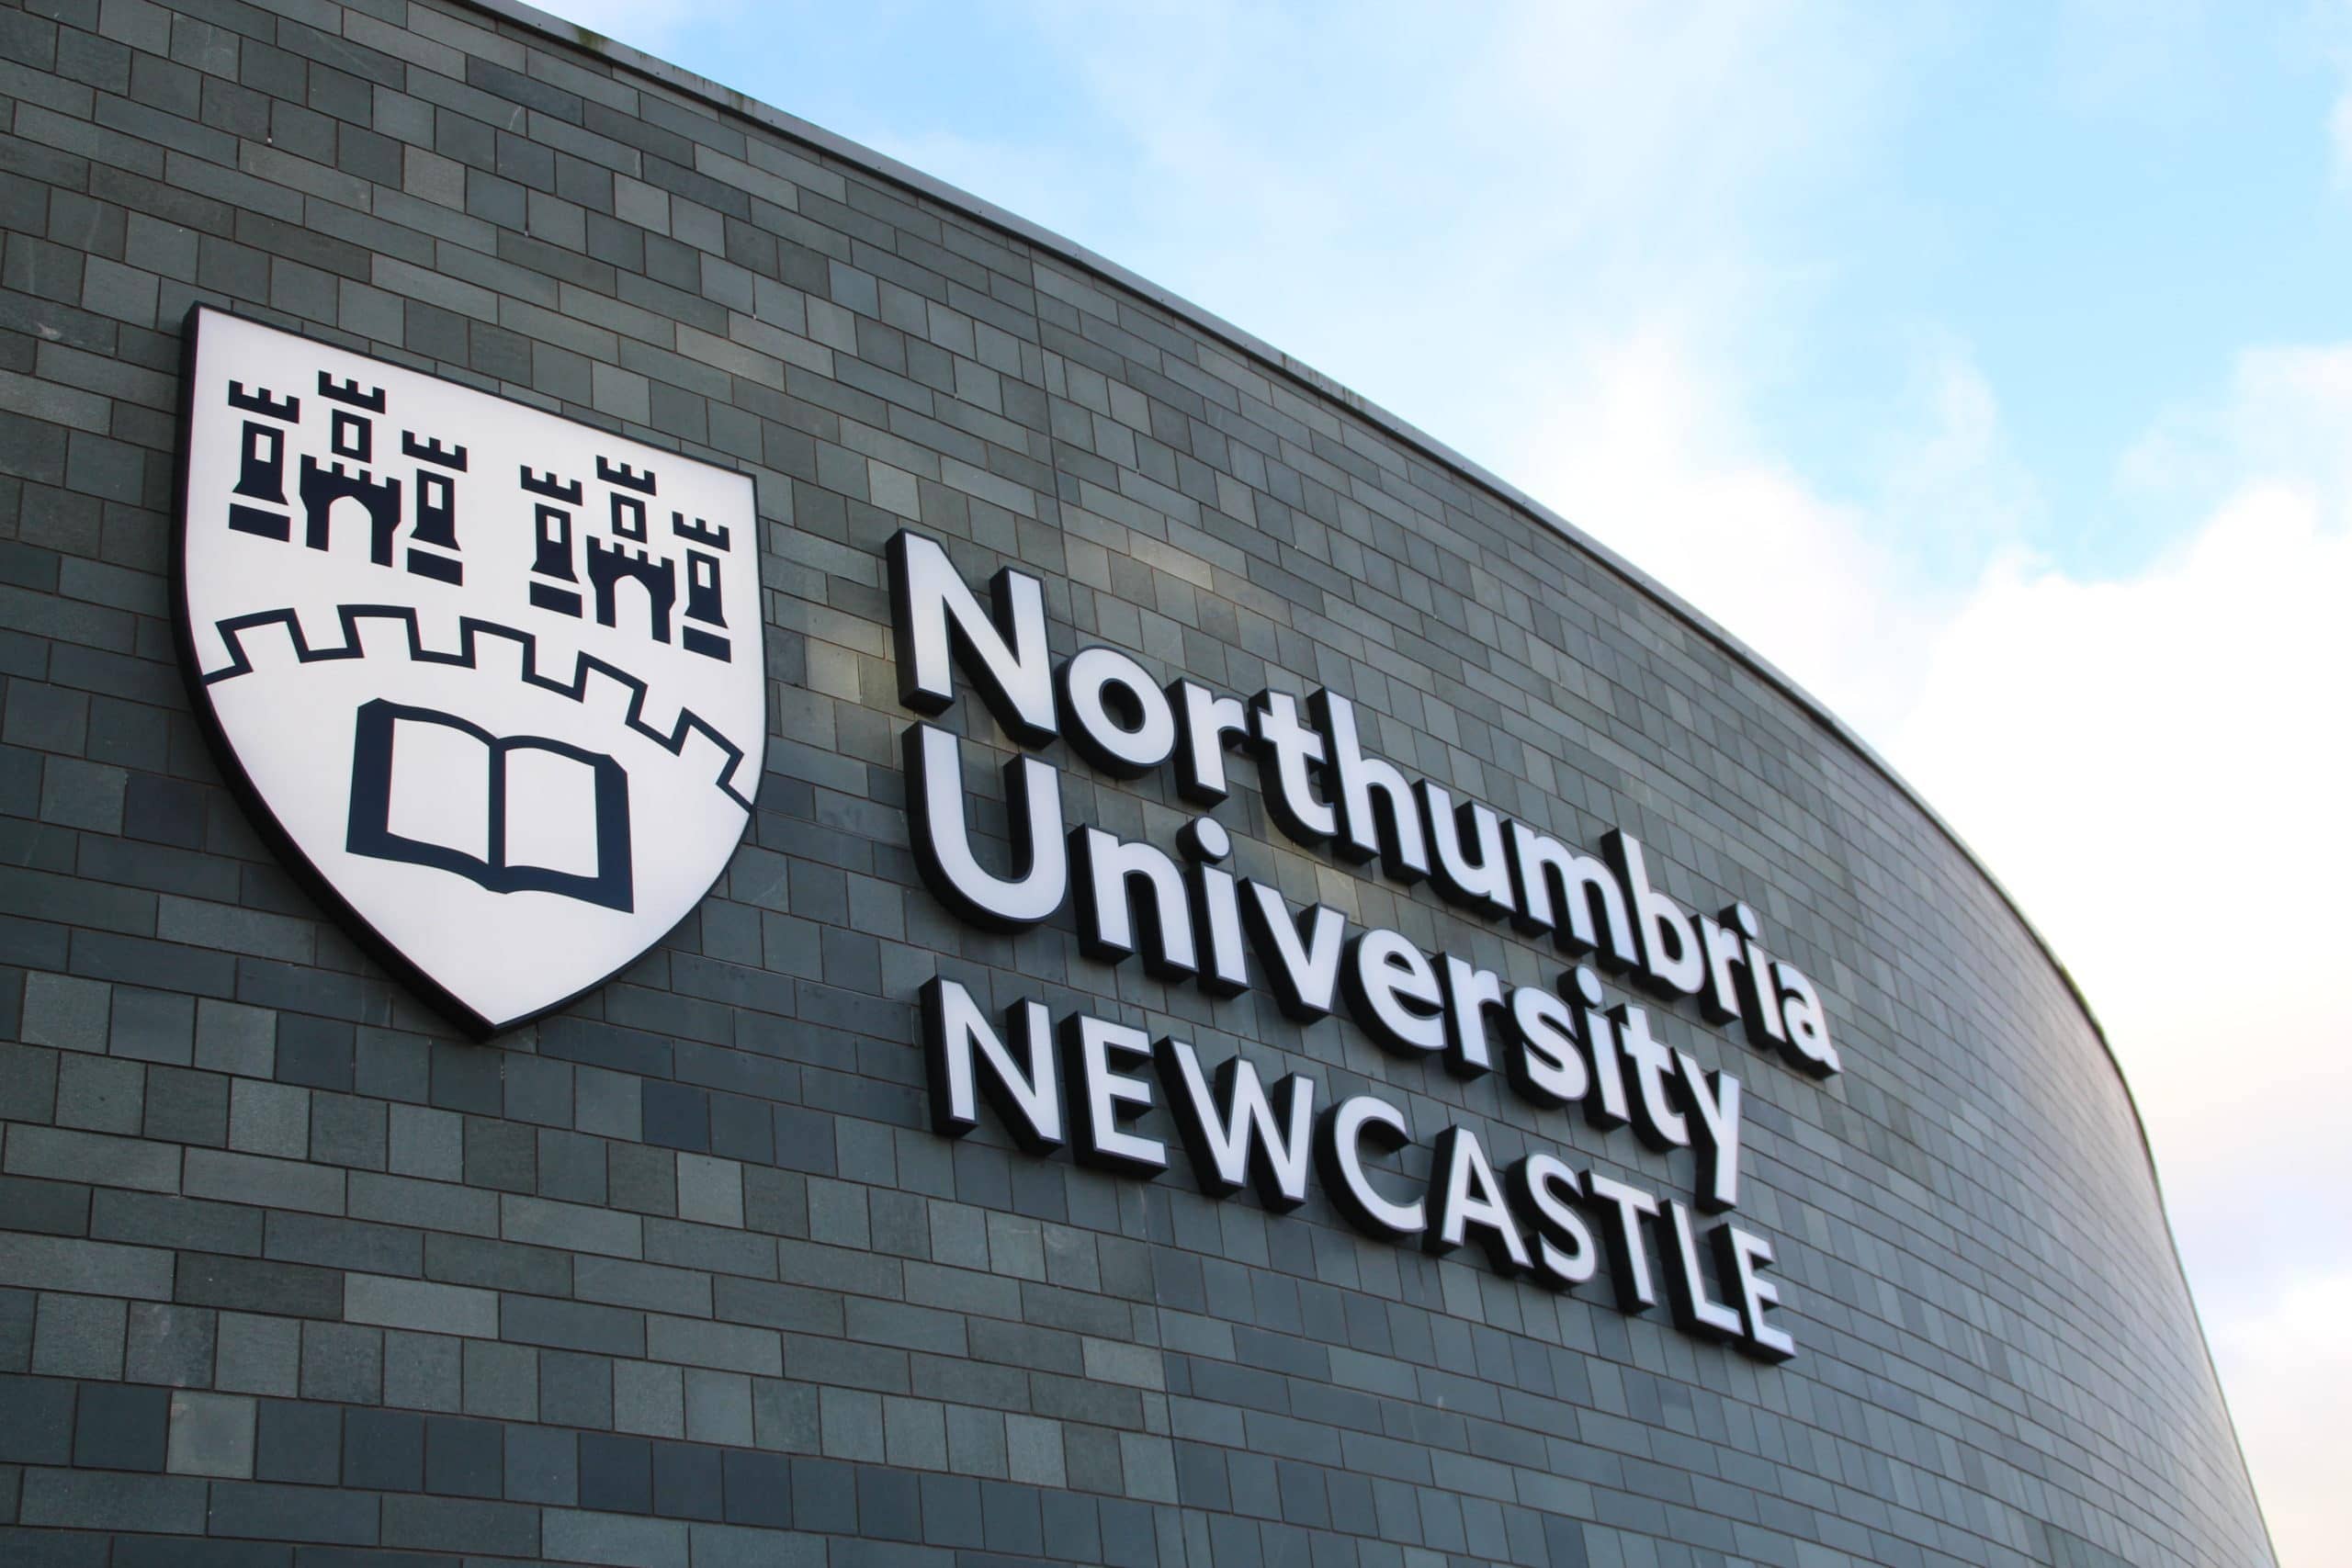 Postdoctoral Research Fellow Light at Northumbria University, UK